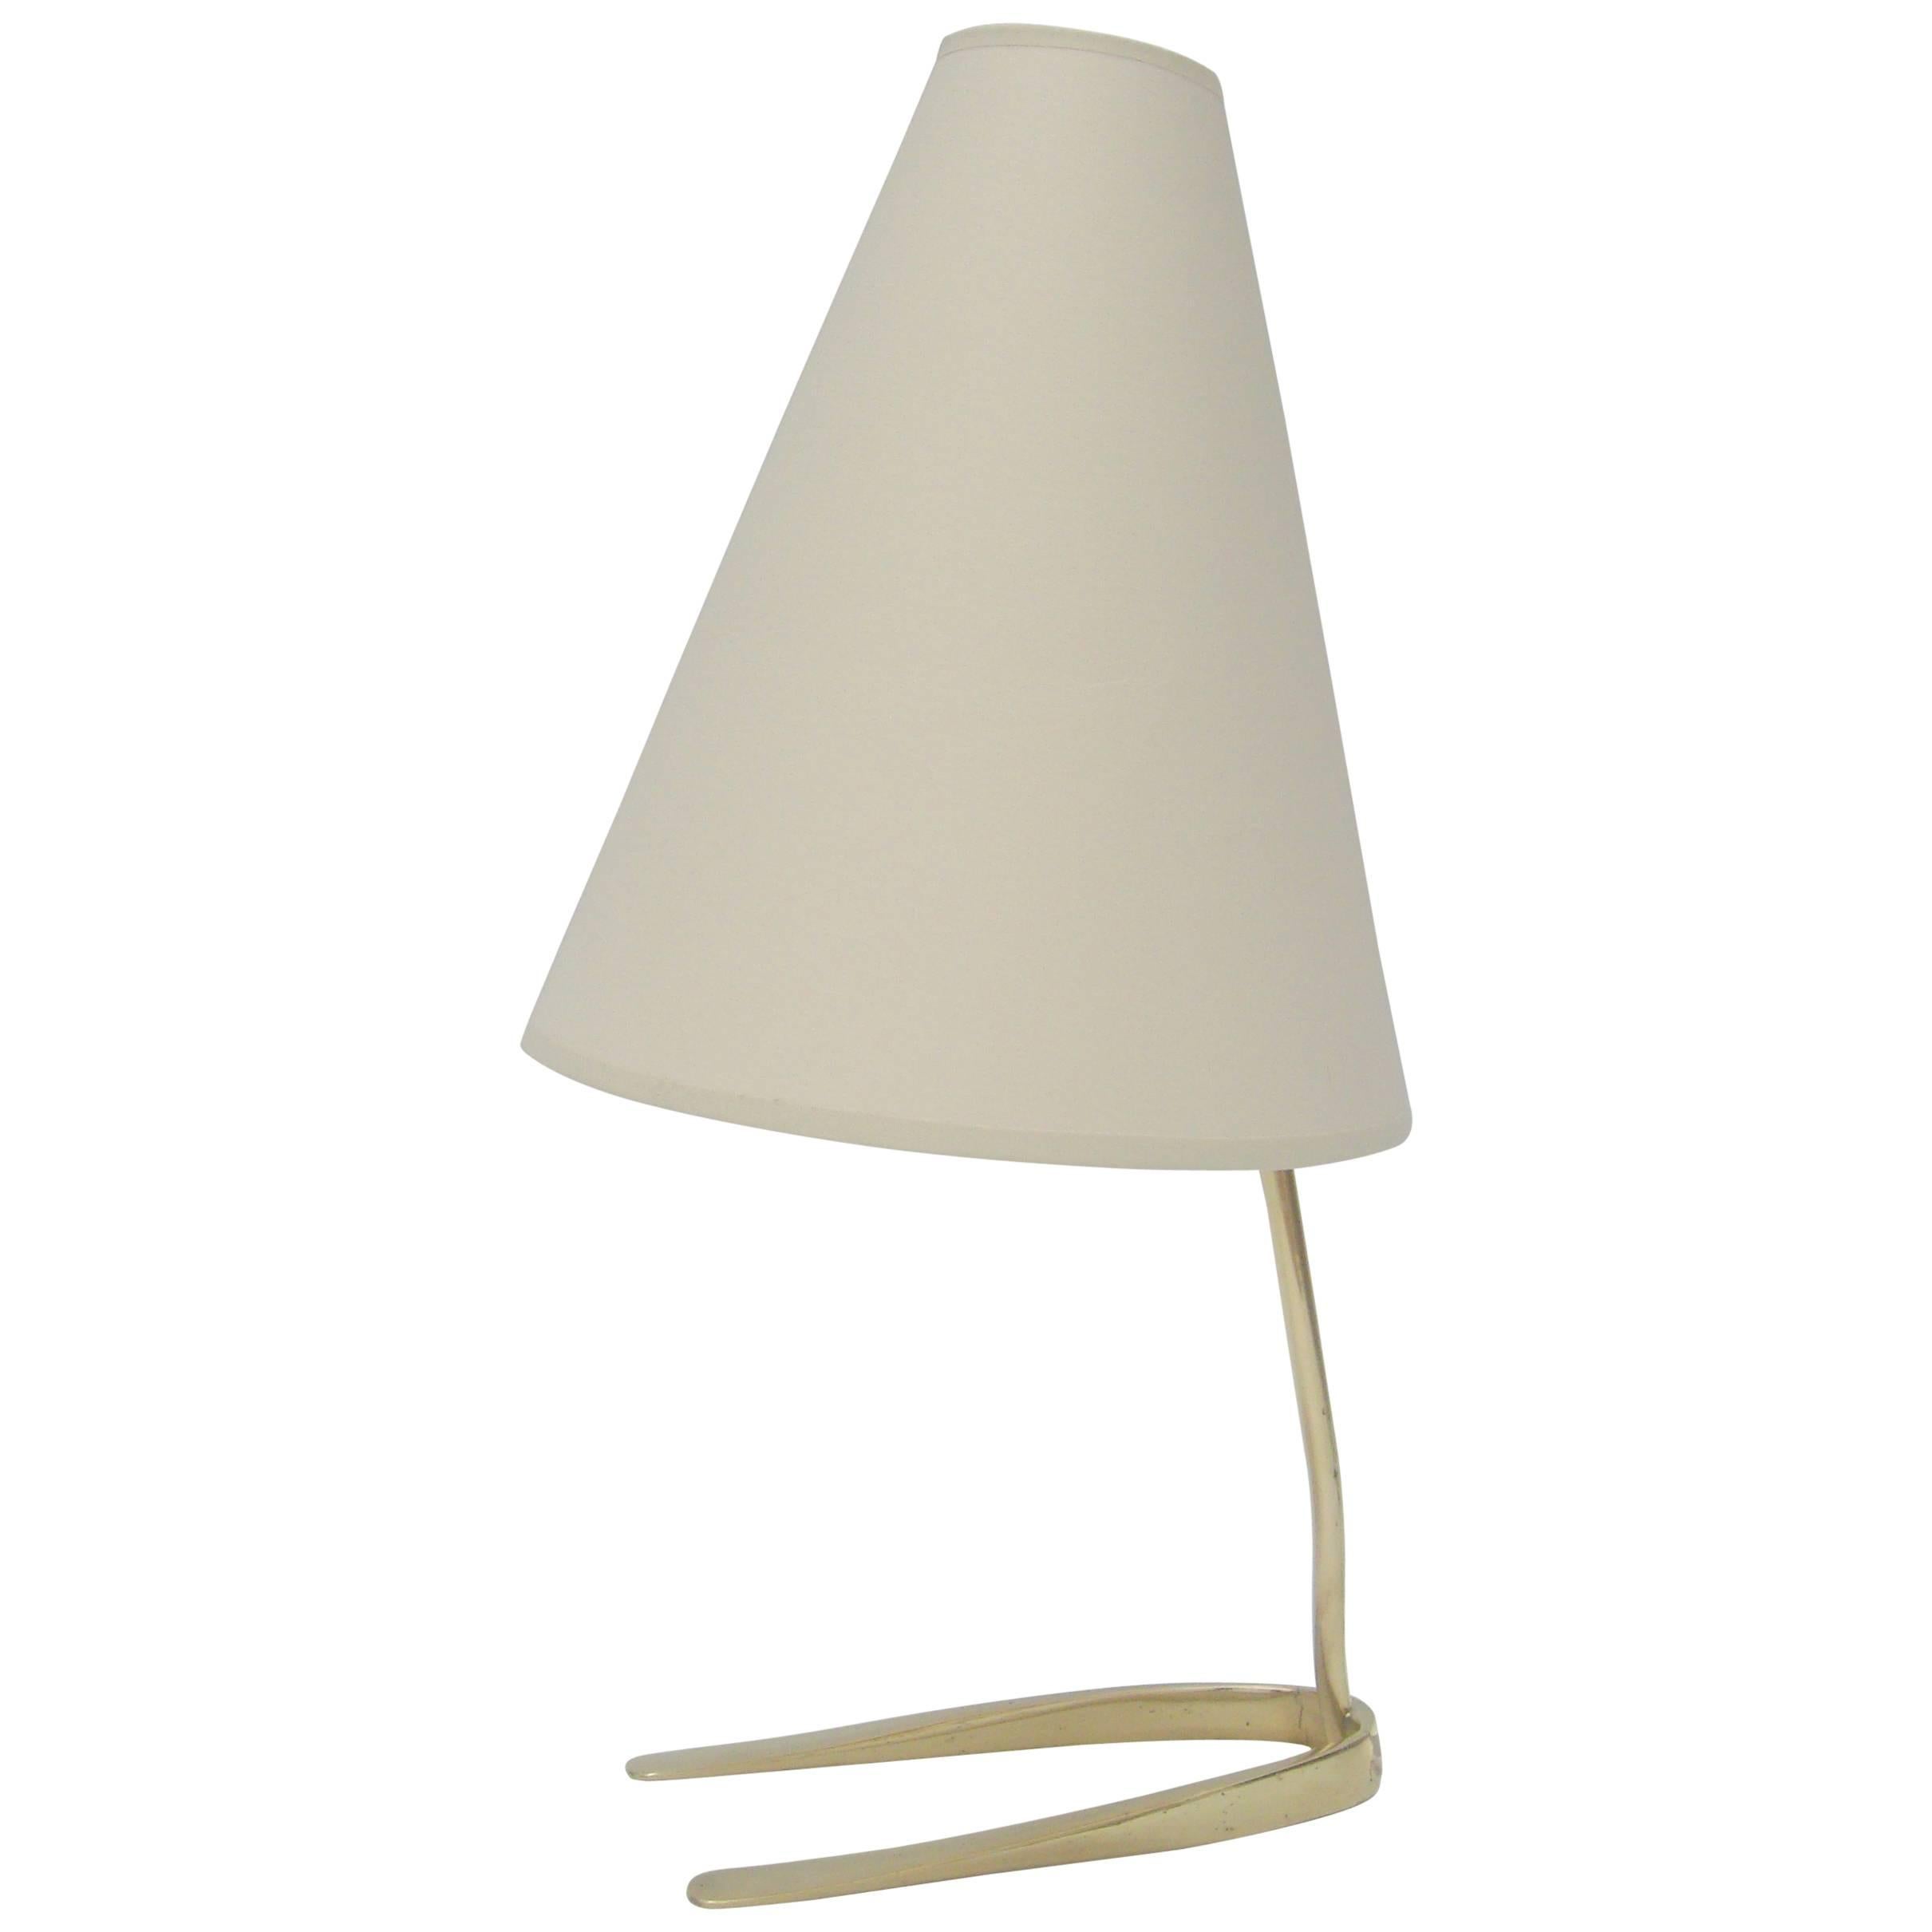 Italian 1950s Brass Desk Lamp For Sale